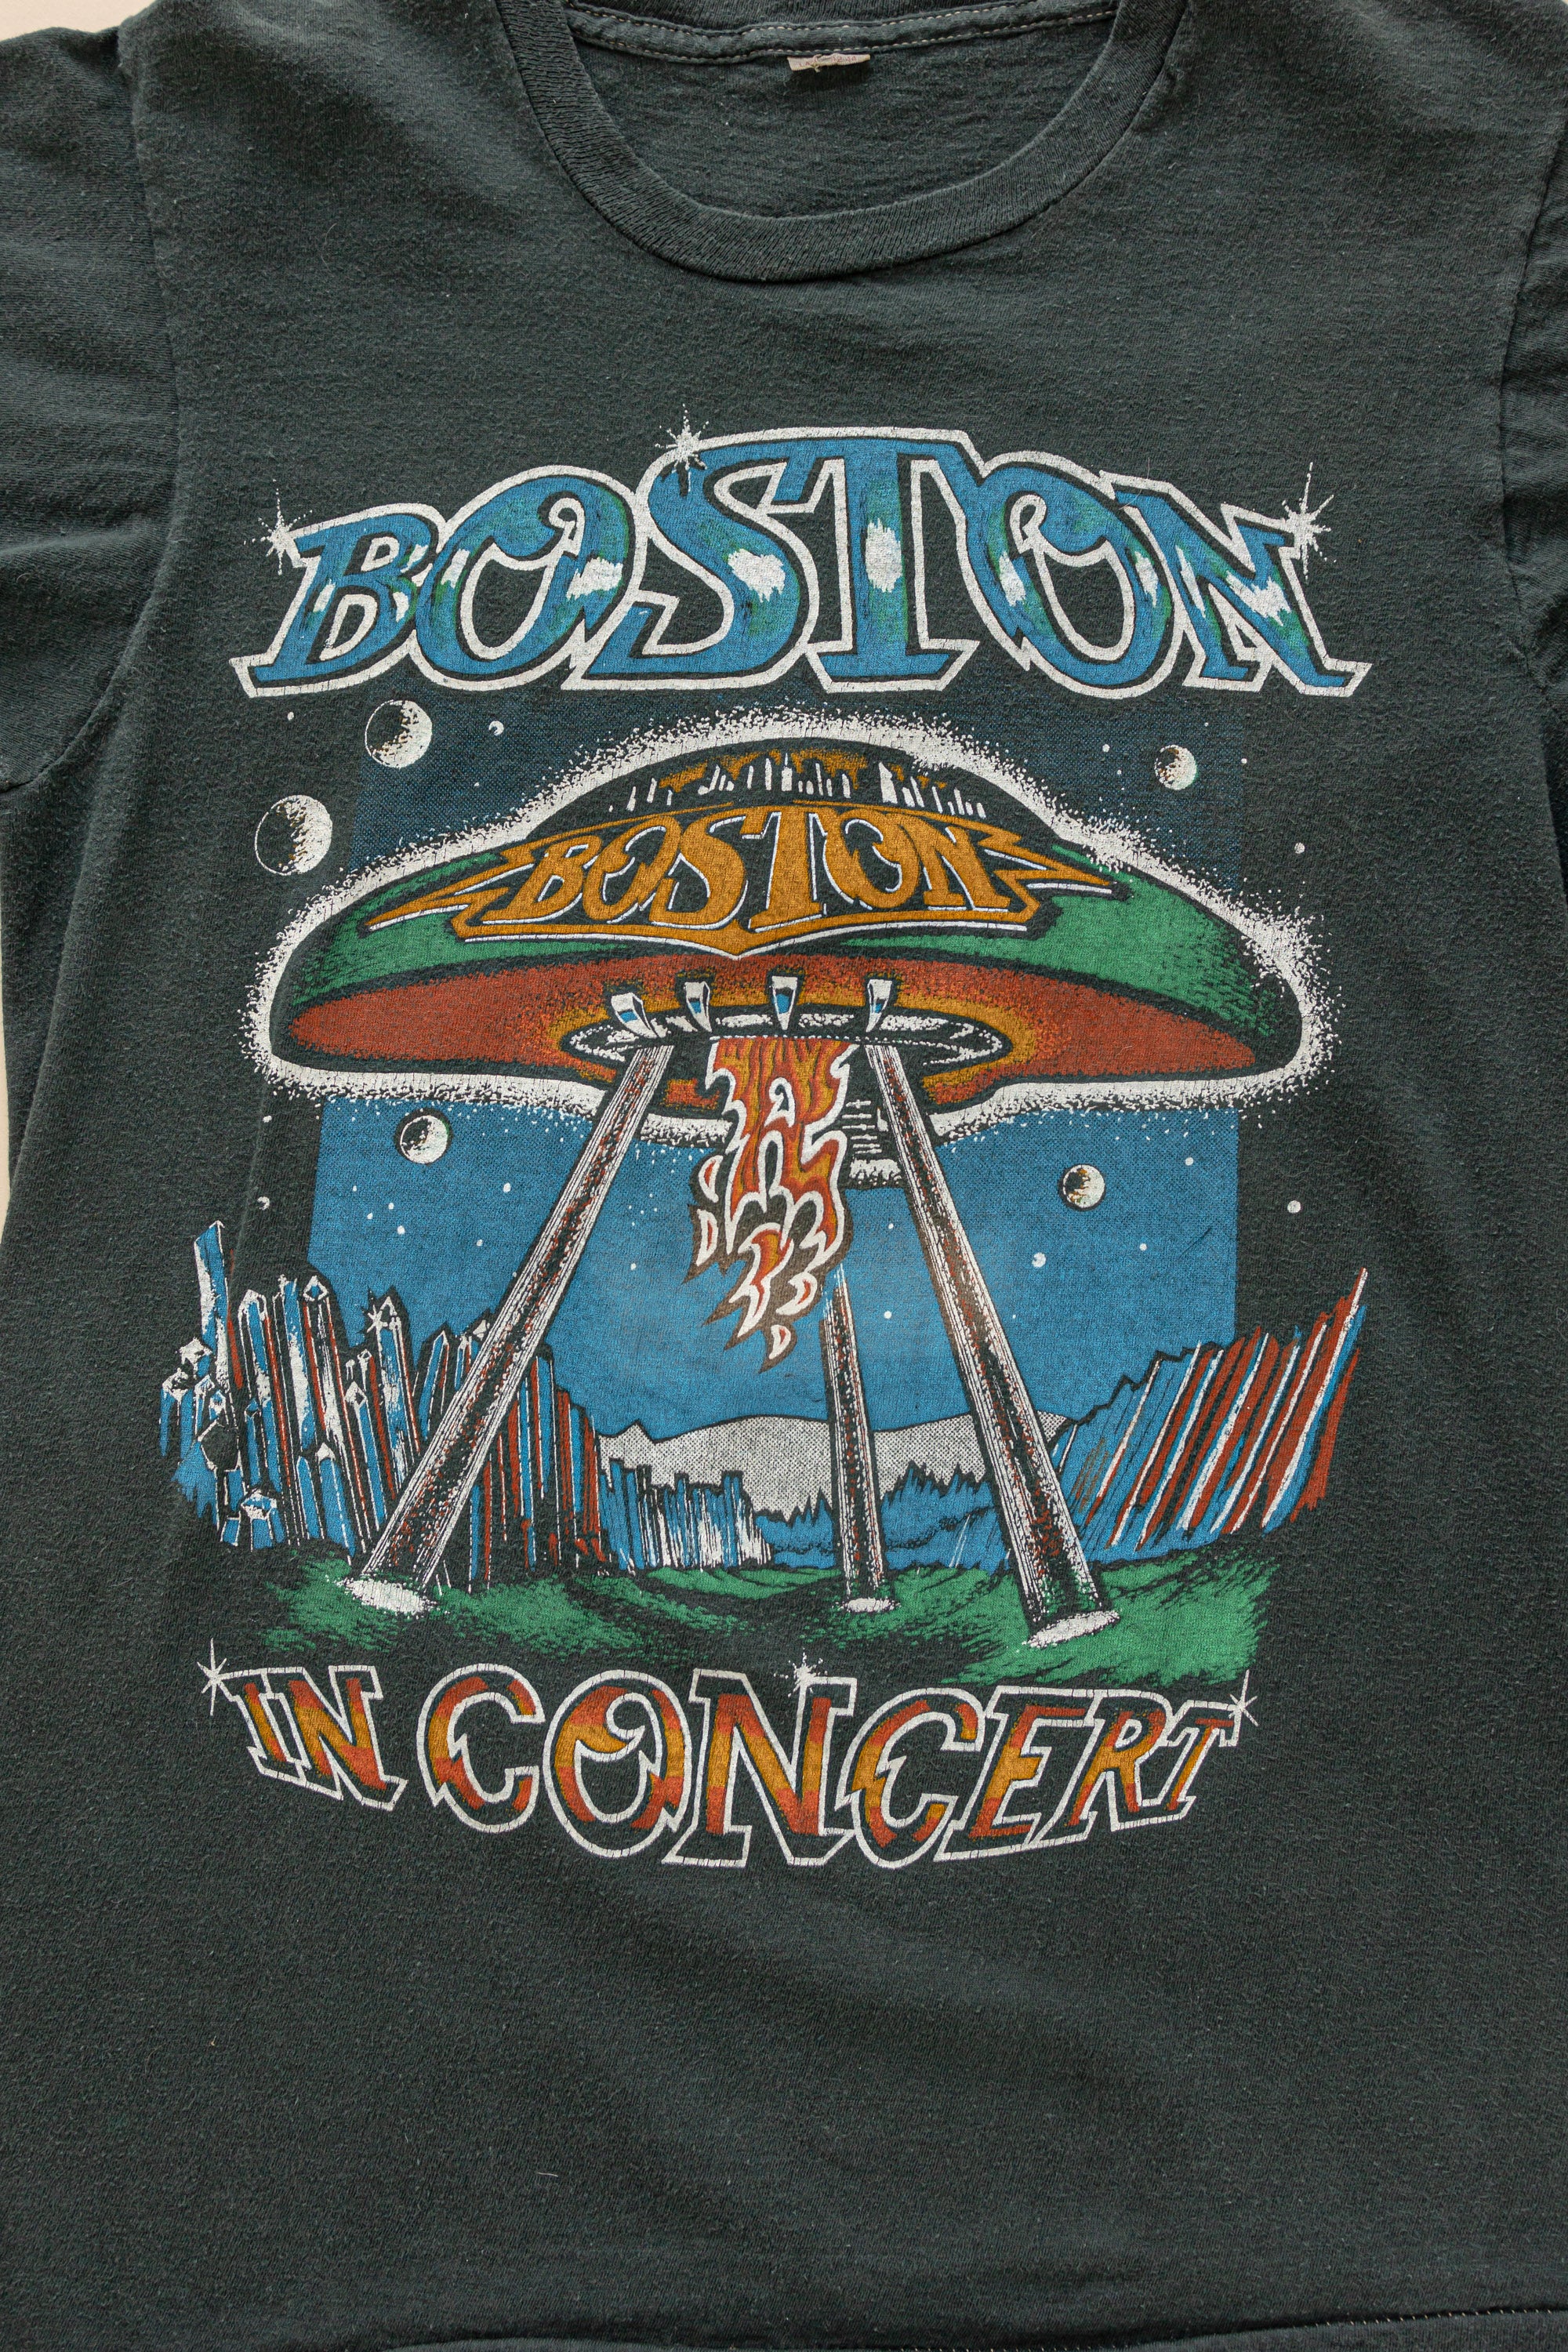 Vintage 1970's Boston T-shirt, 1979 in concert t-shirt, Single stitch